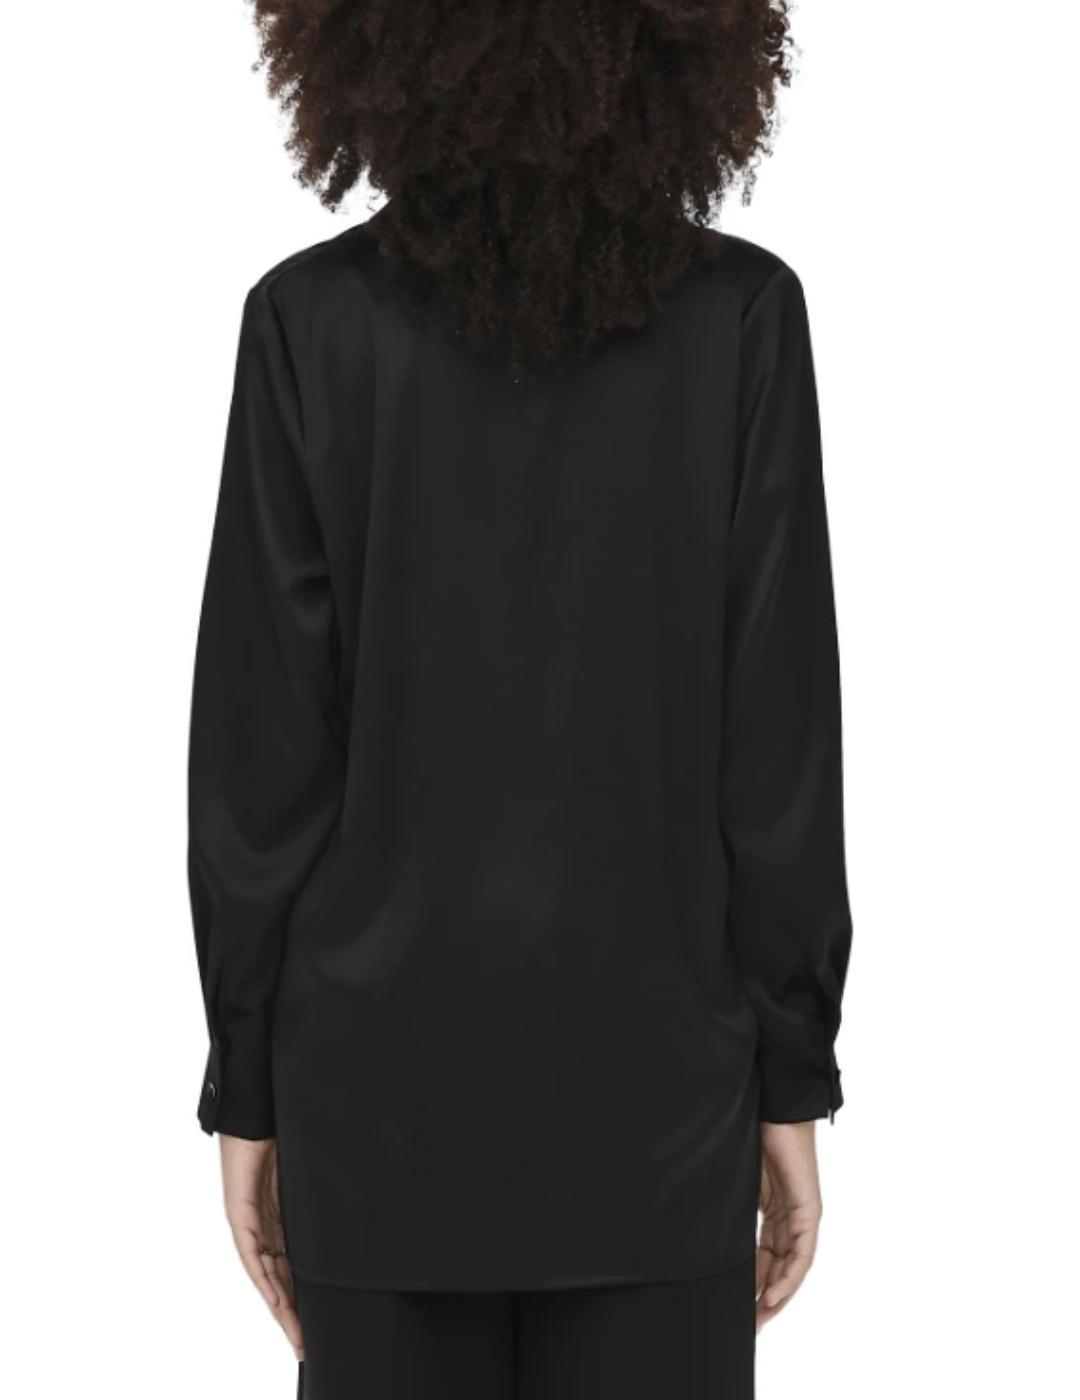 Camisa Only Victoria de manga larga satinada en negra mujer